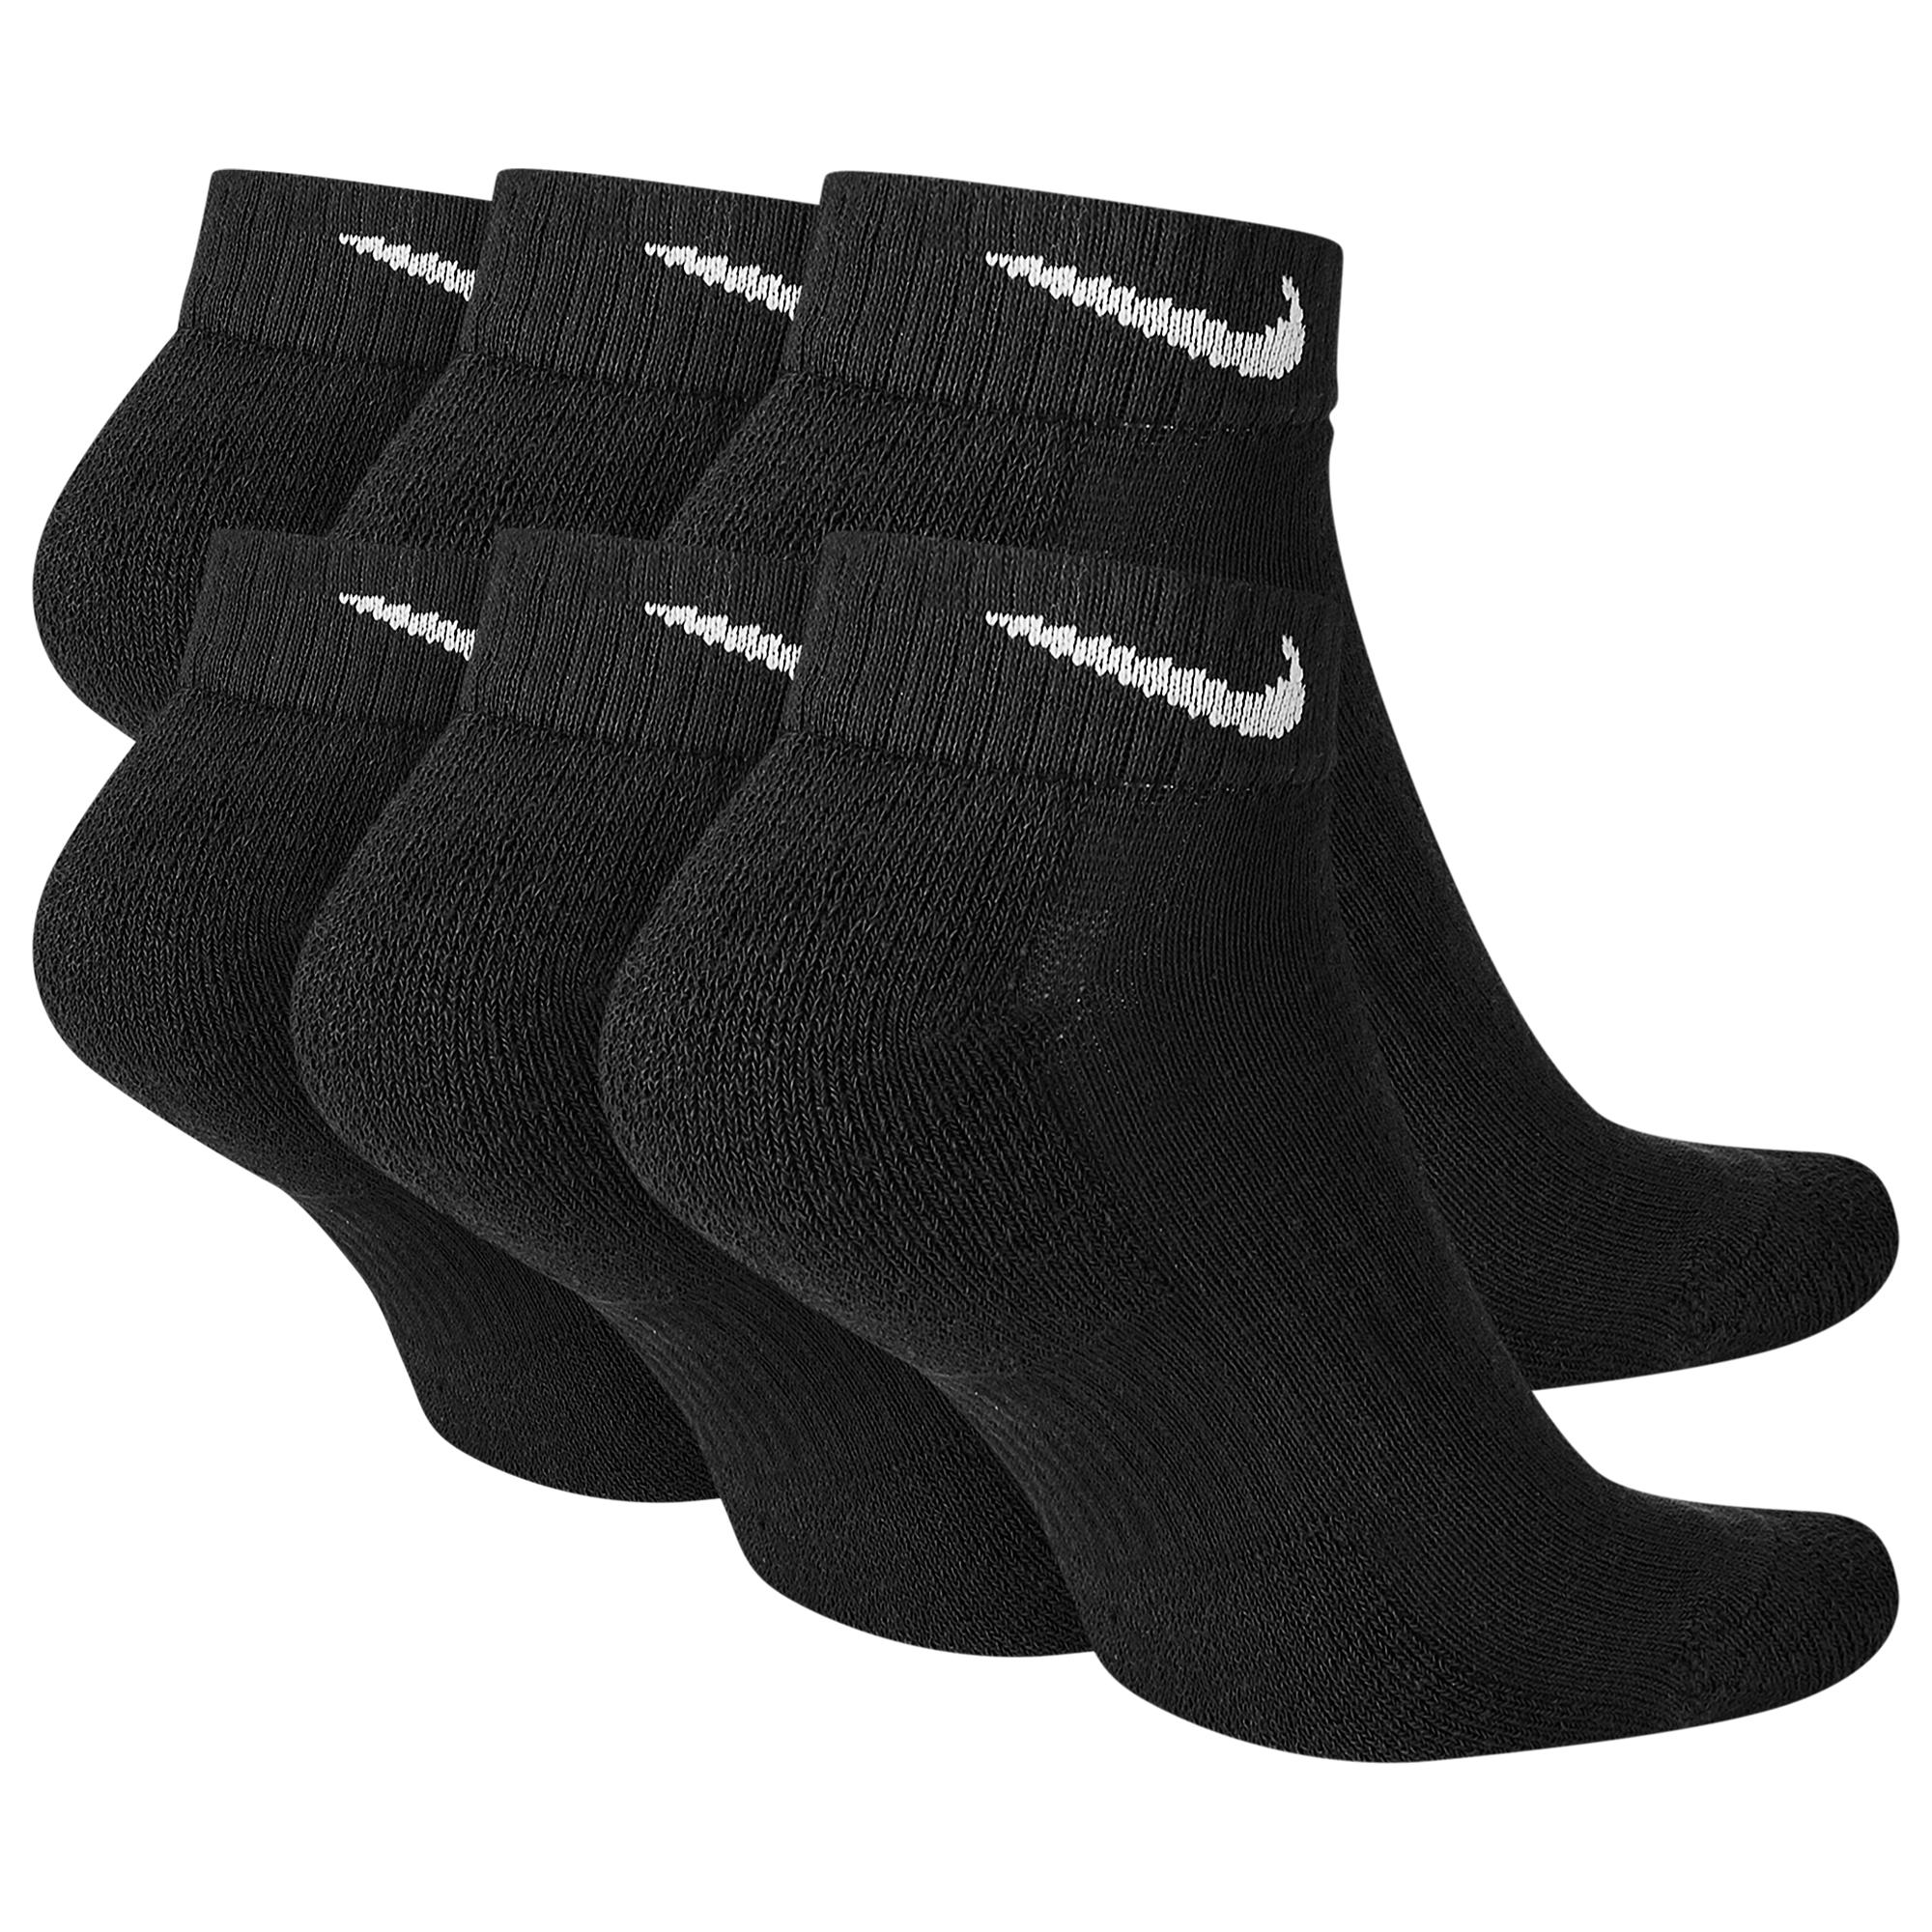 Nike 6 Pk Dri-fit Cotton Low Cut Socks in Black for Men - Save 11% - Lyst